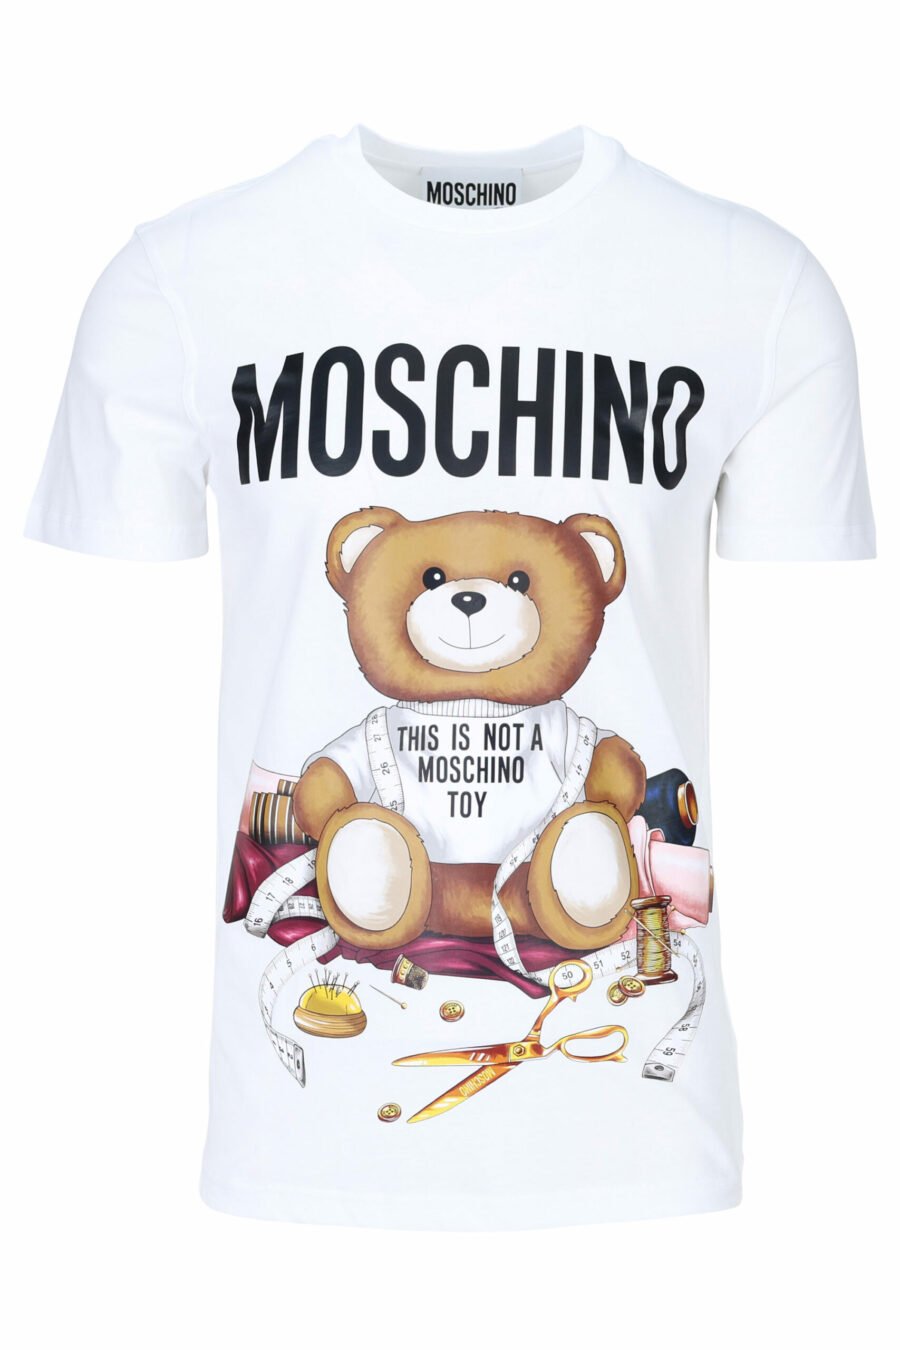 Camiseta blanca con maxilogo "teddy" sastre - 667113108100 scaled